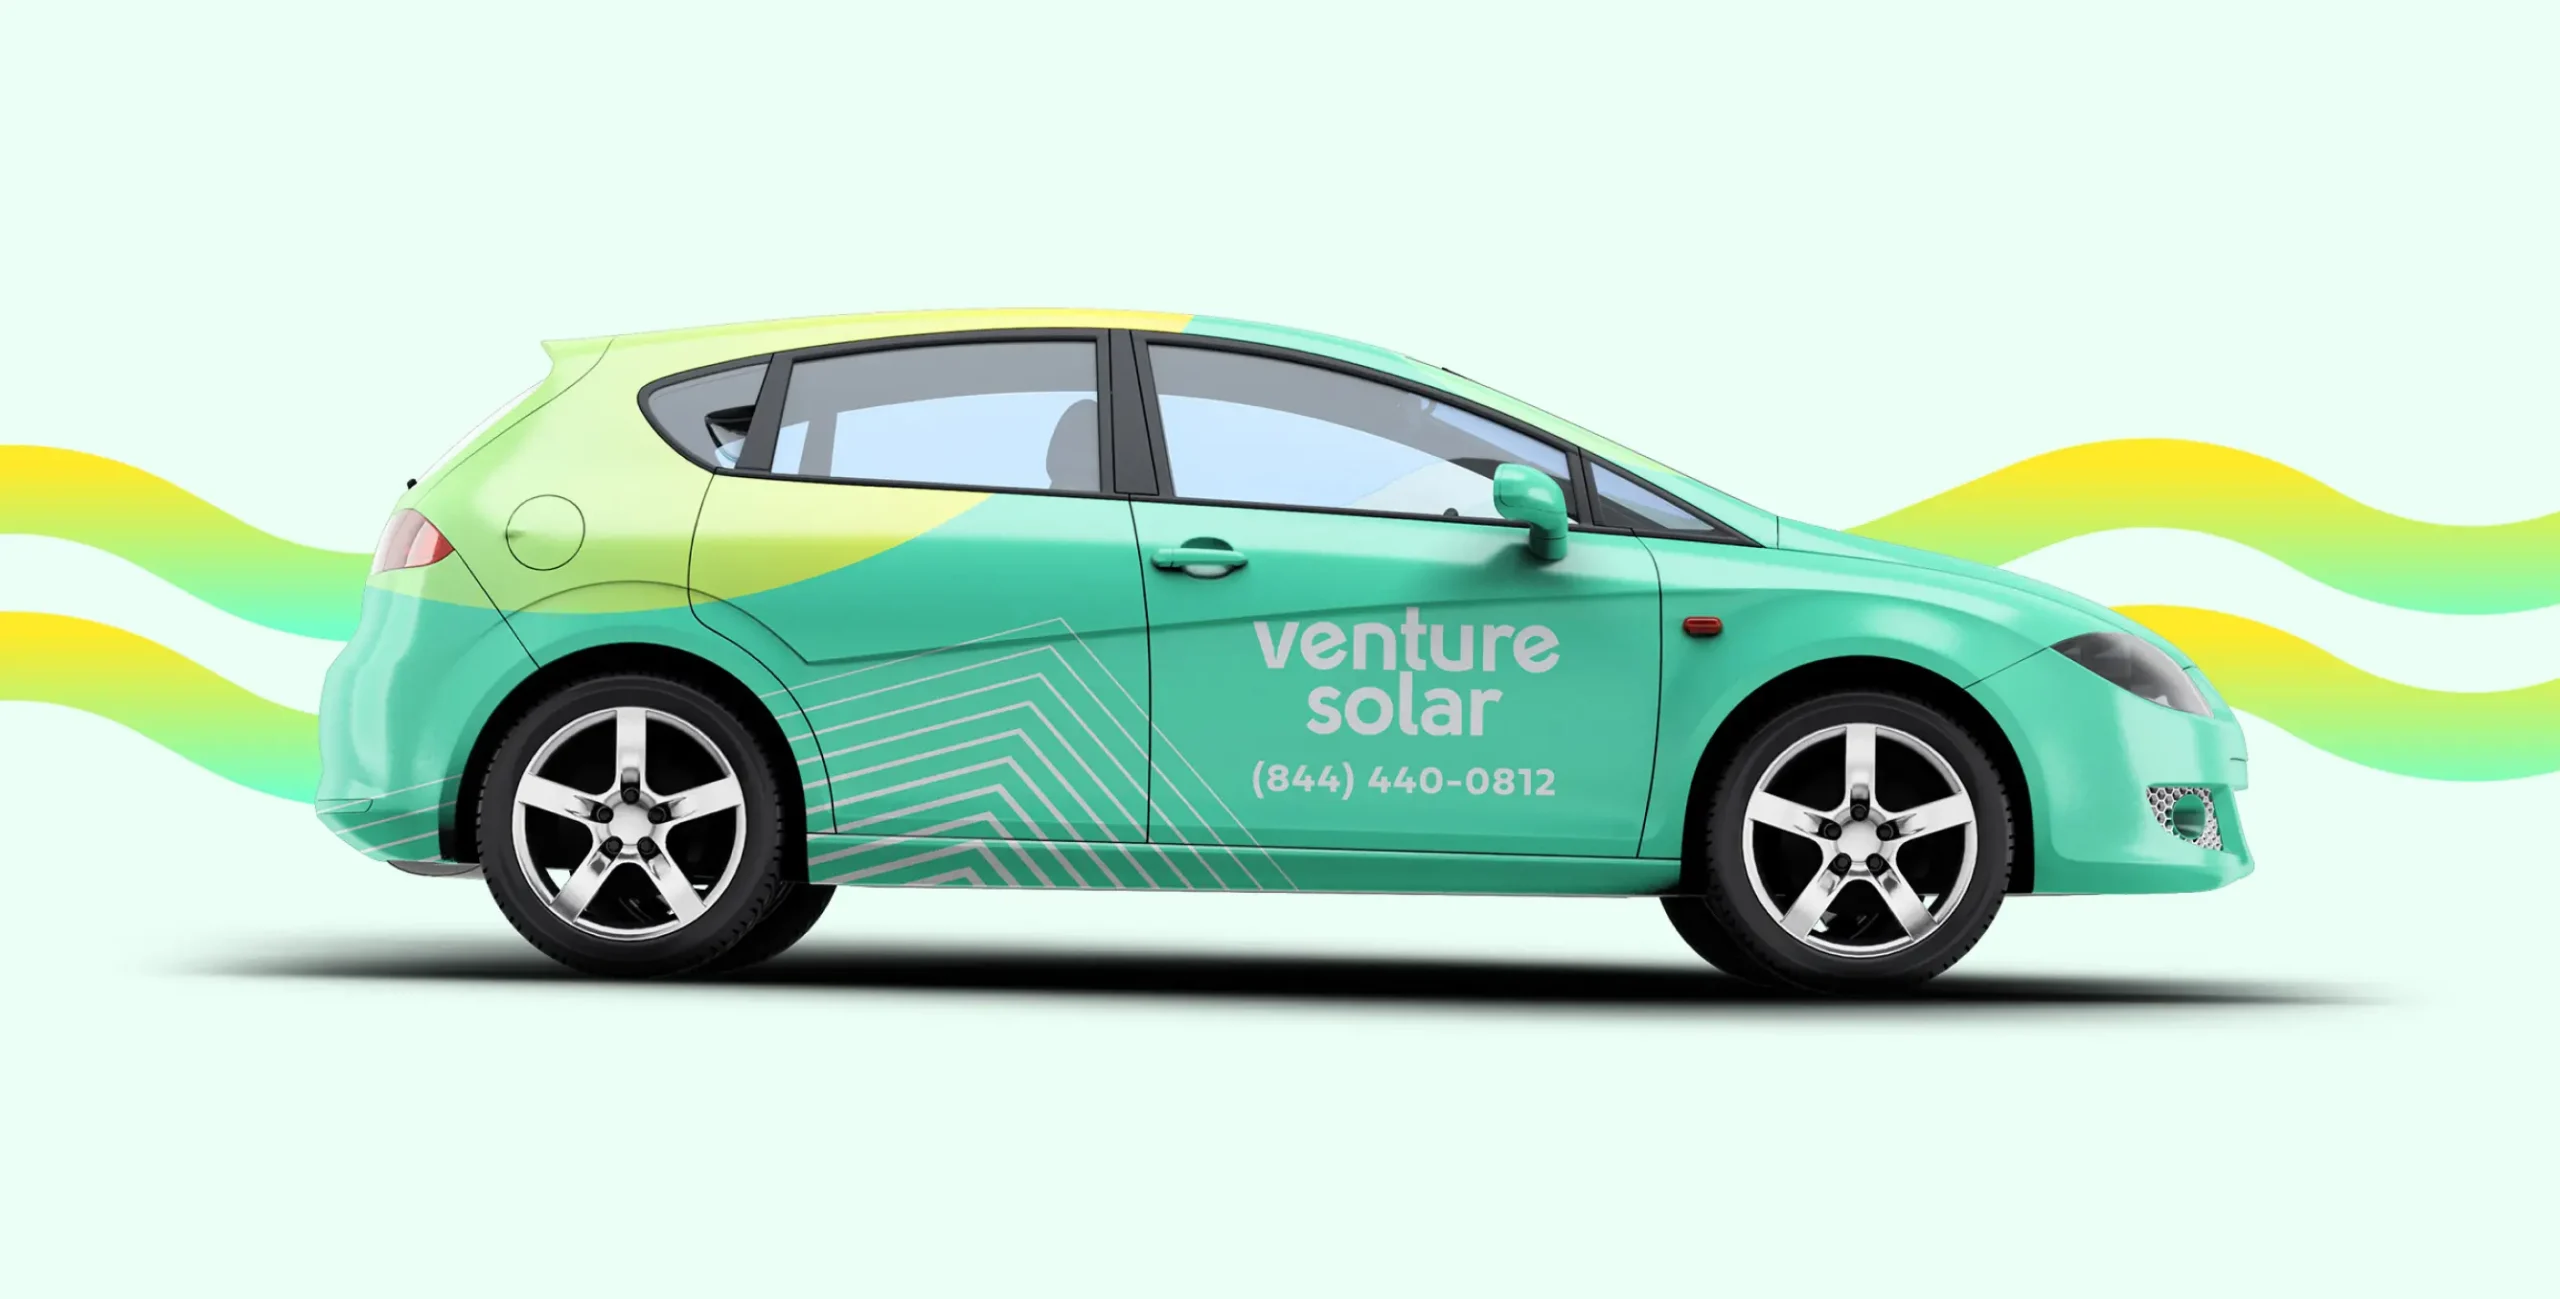 Venture Solar Vehicle Wrap Design